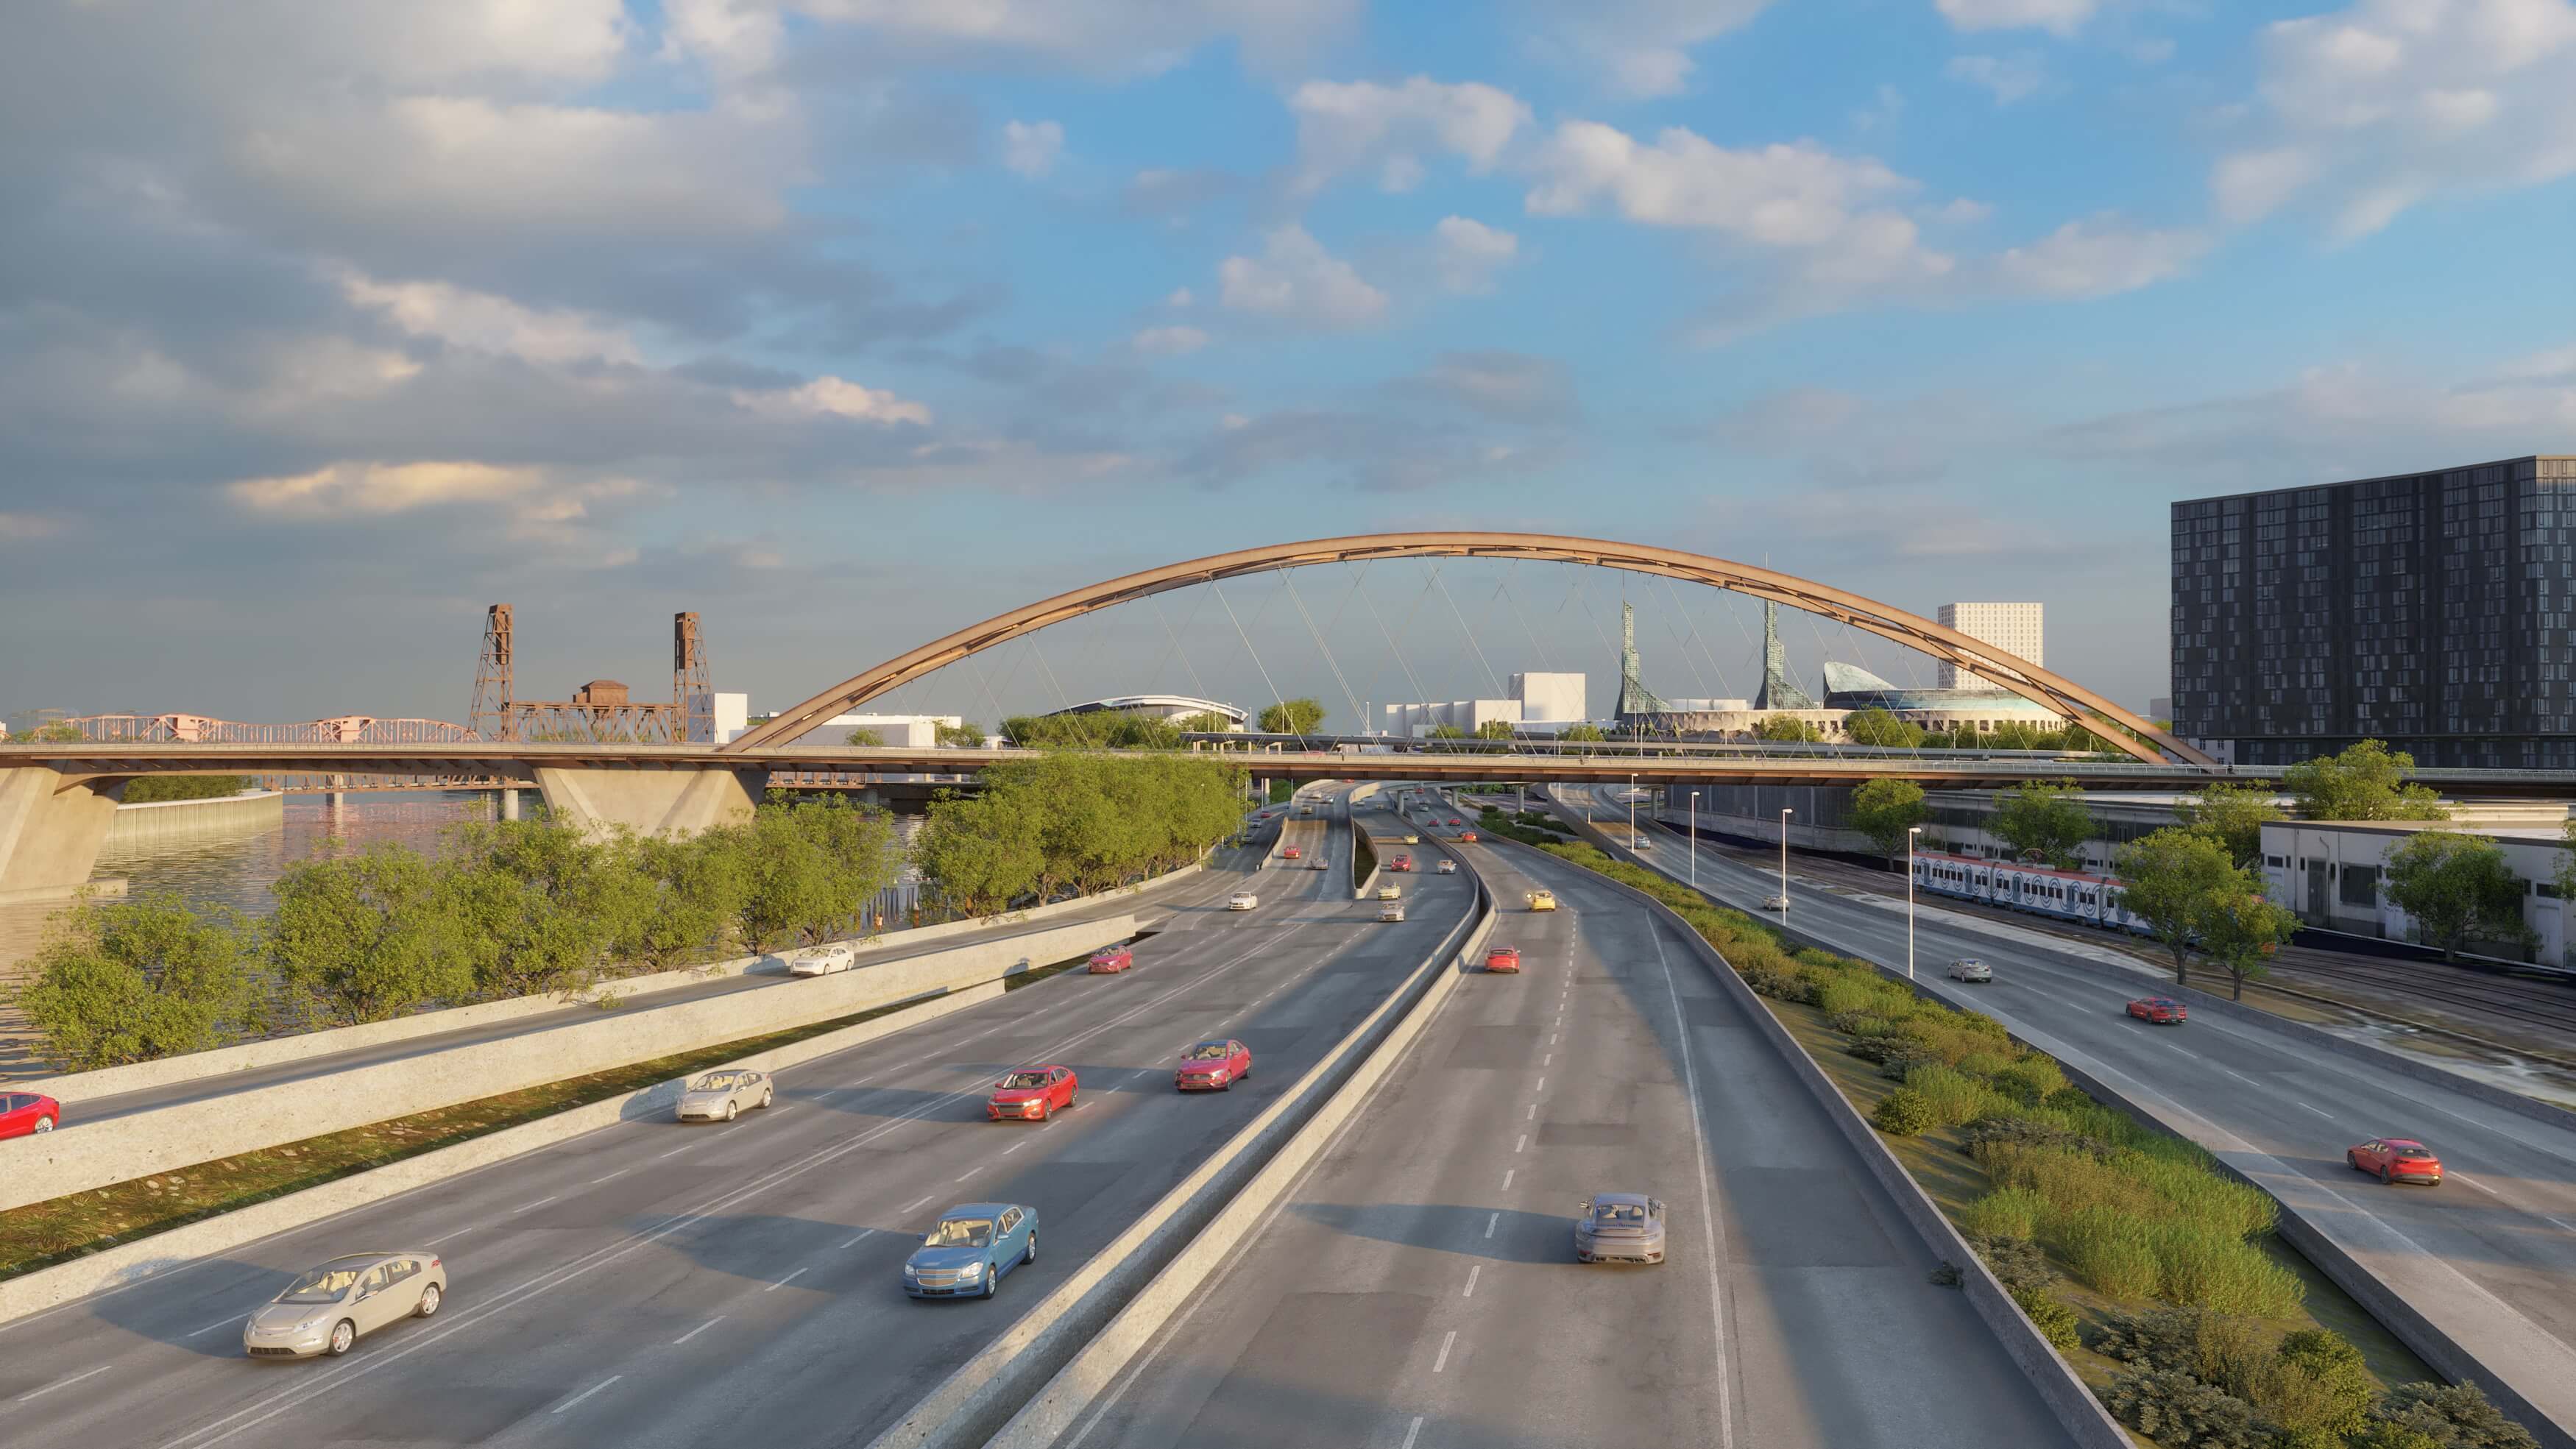 Bridge placement comparison (north view): Shows the arch straddling the I-5 corridor. 